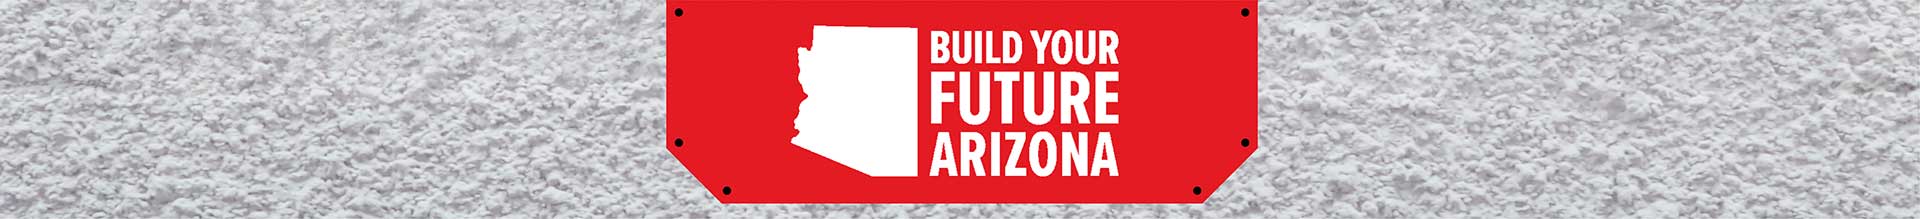 Builf Your Future Arizona - Plumbing